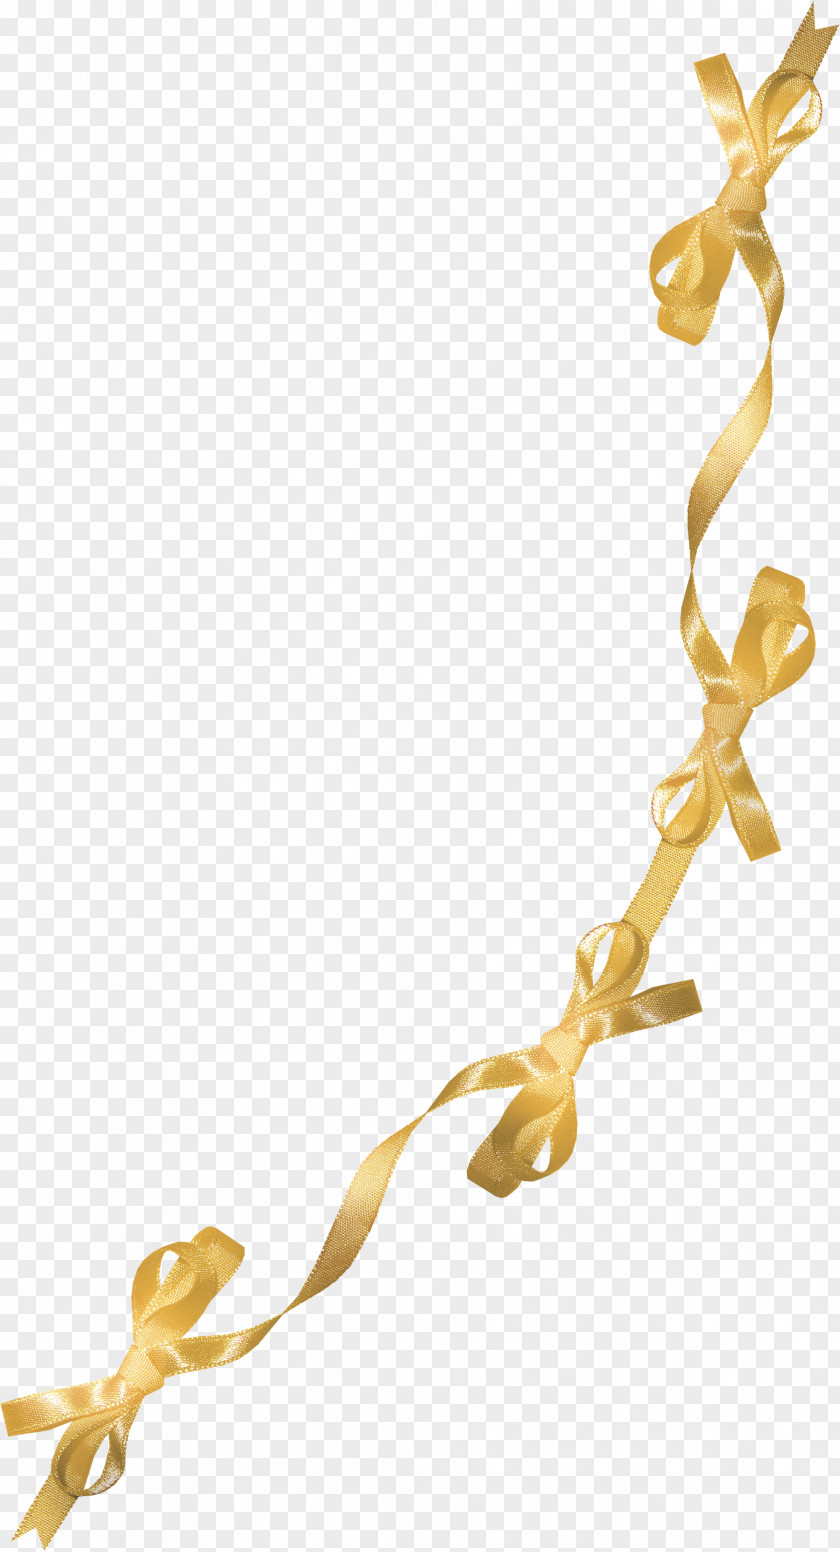 Floating Golden Ribbon Shoelace Knot Clip Art PNG